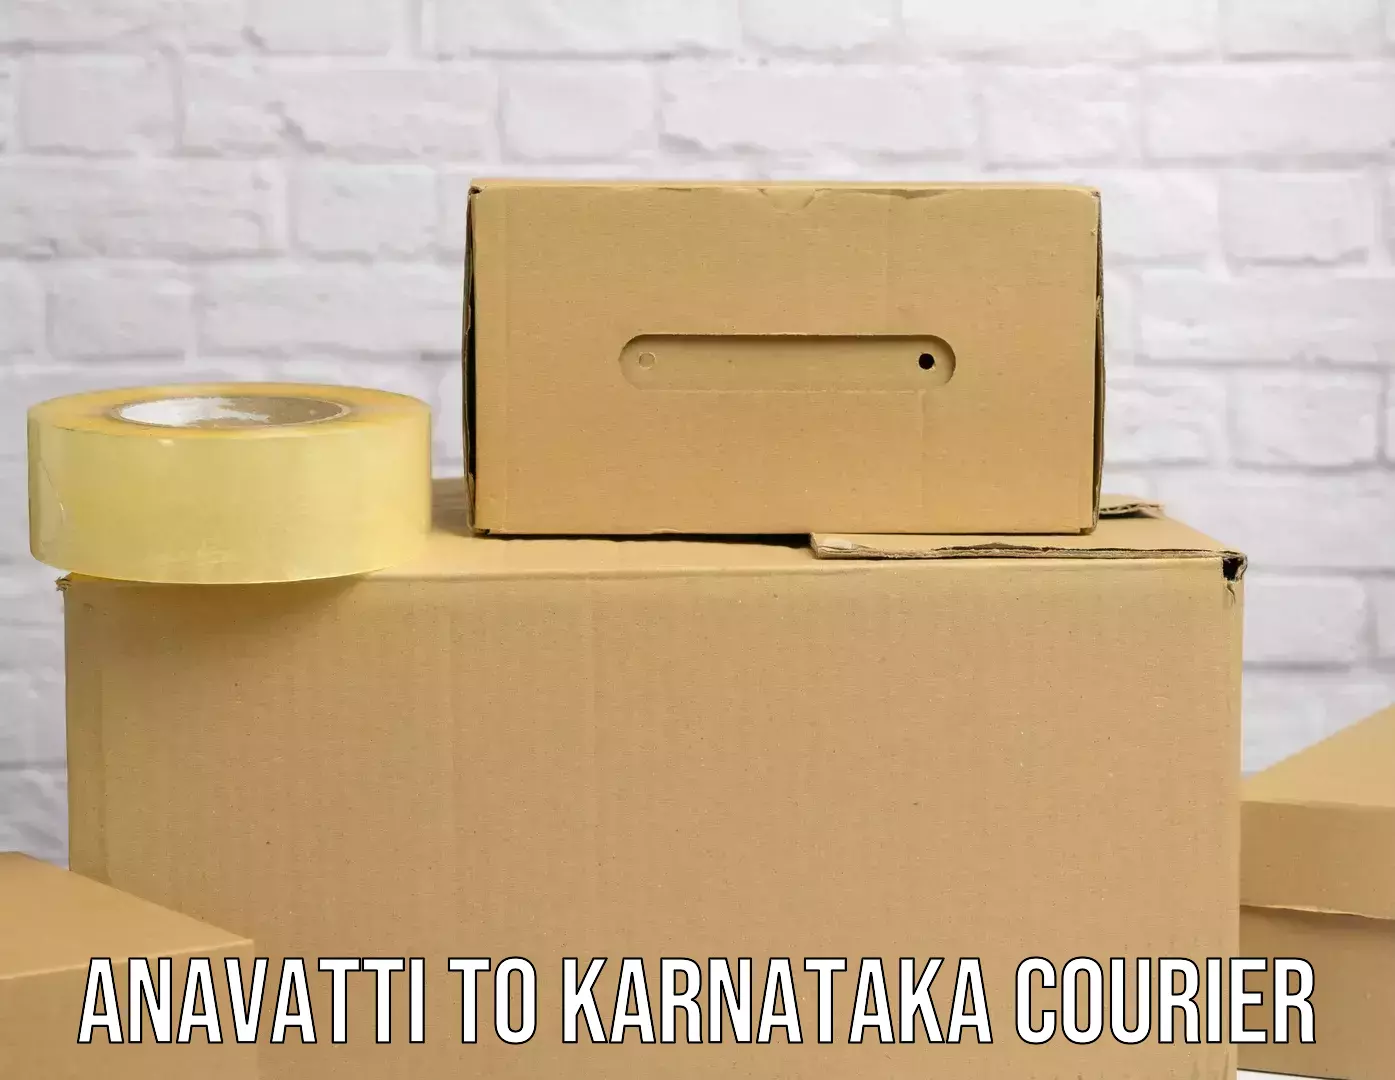 Courier service efficiency Anavatti to Karnataka